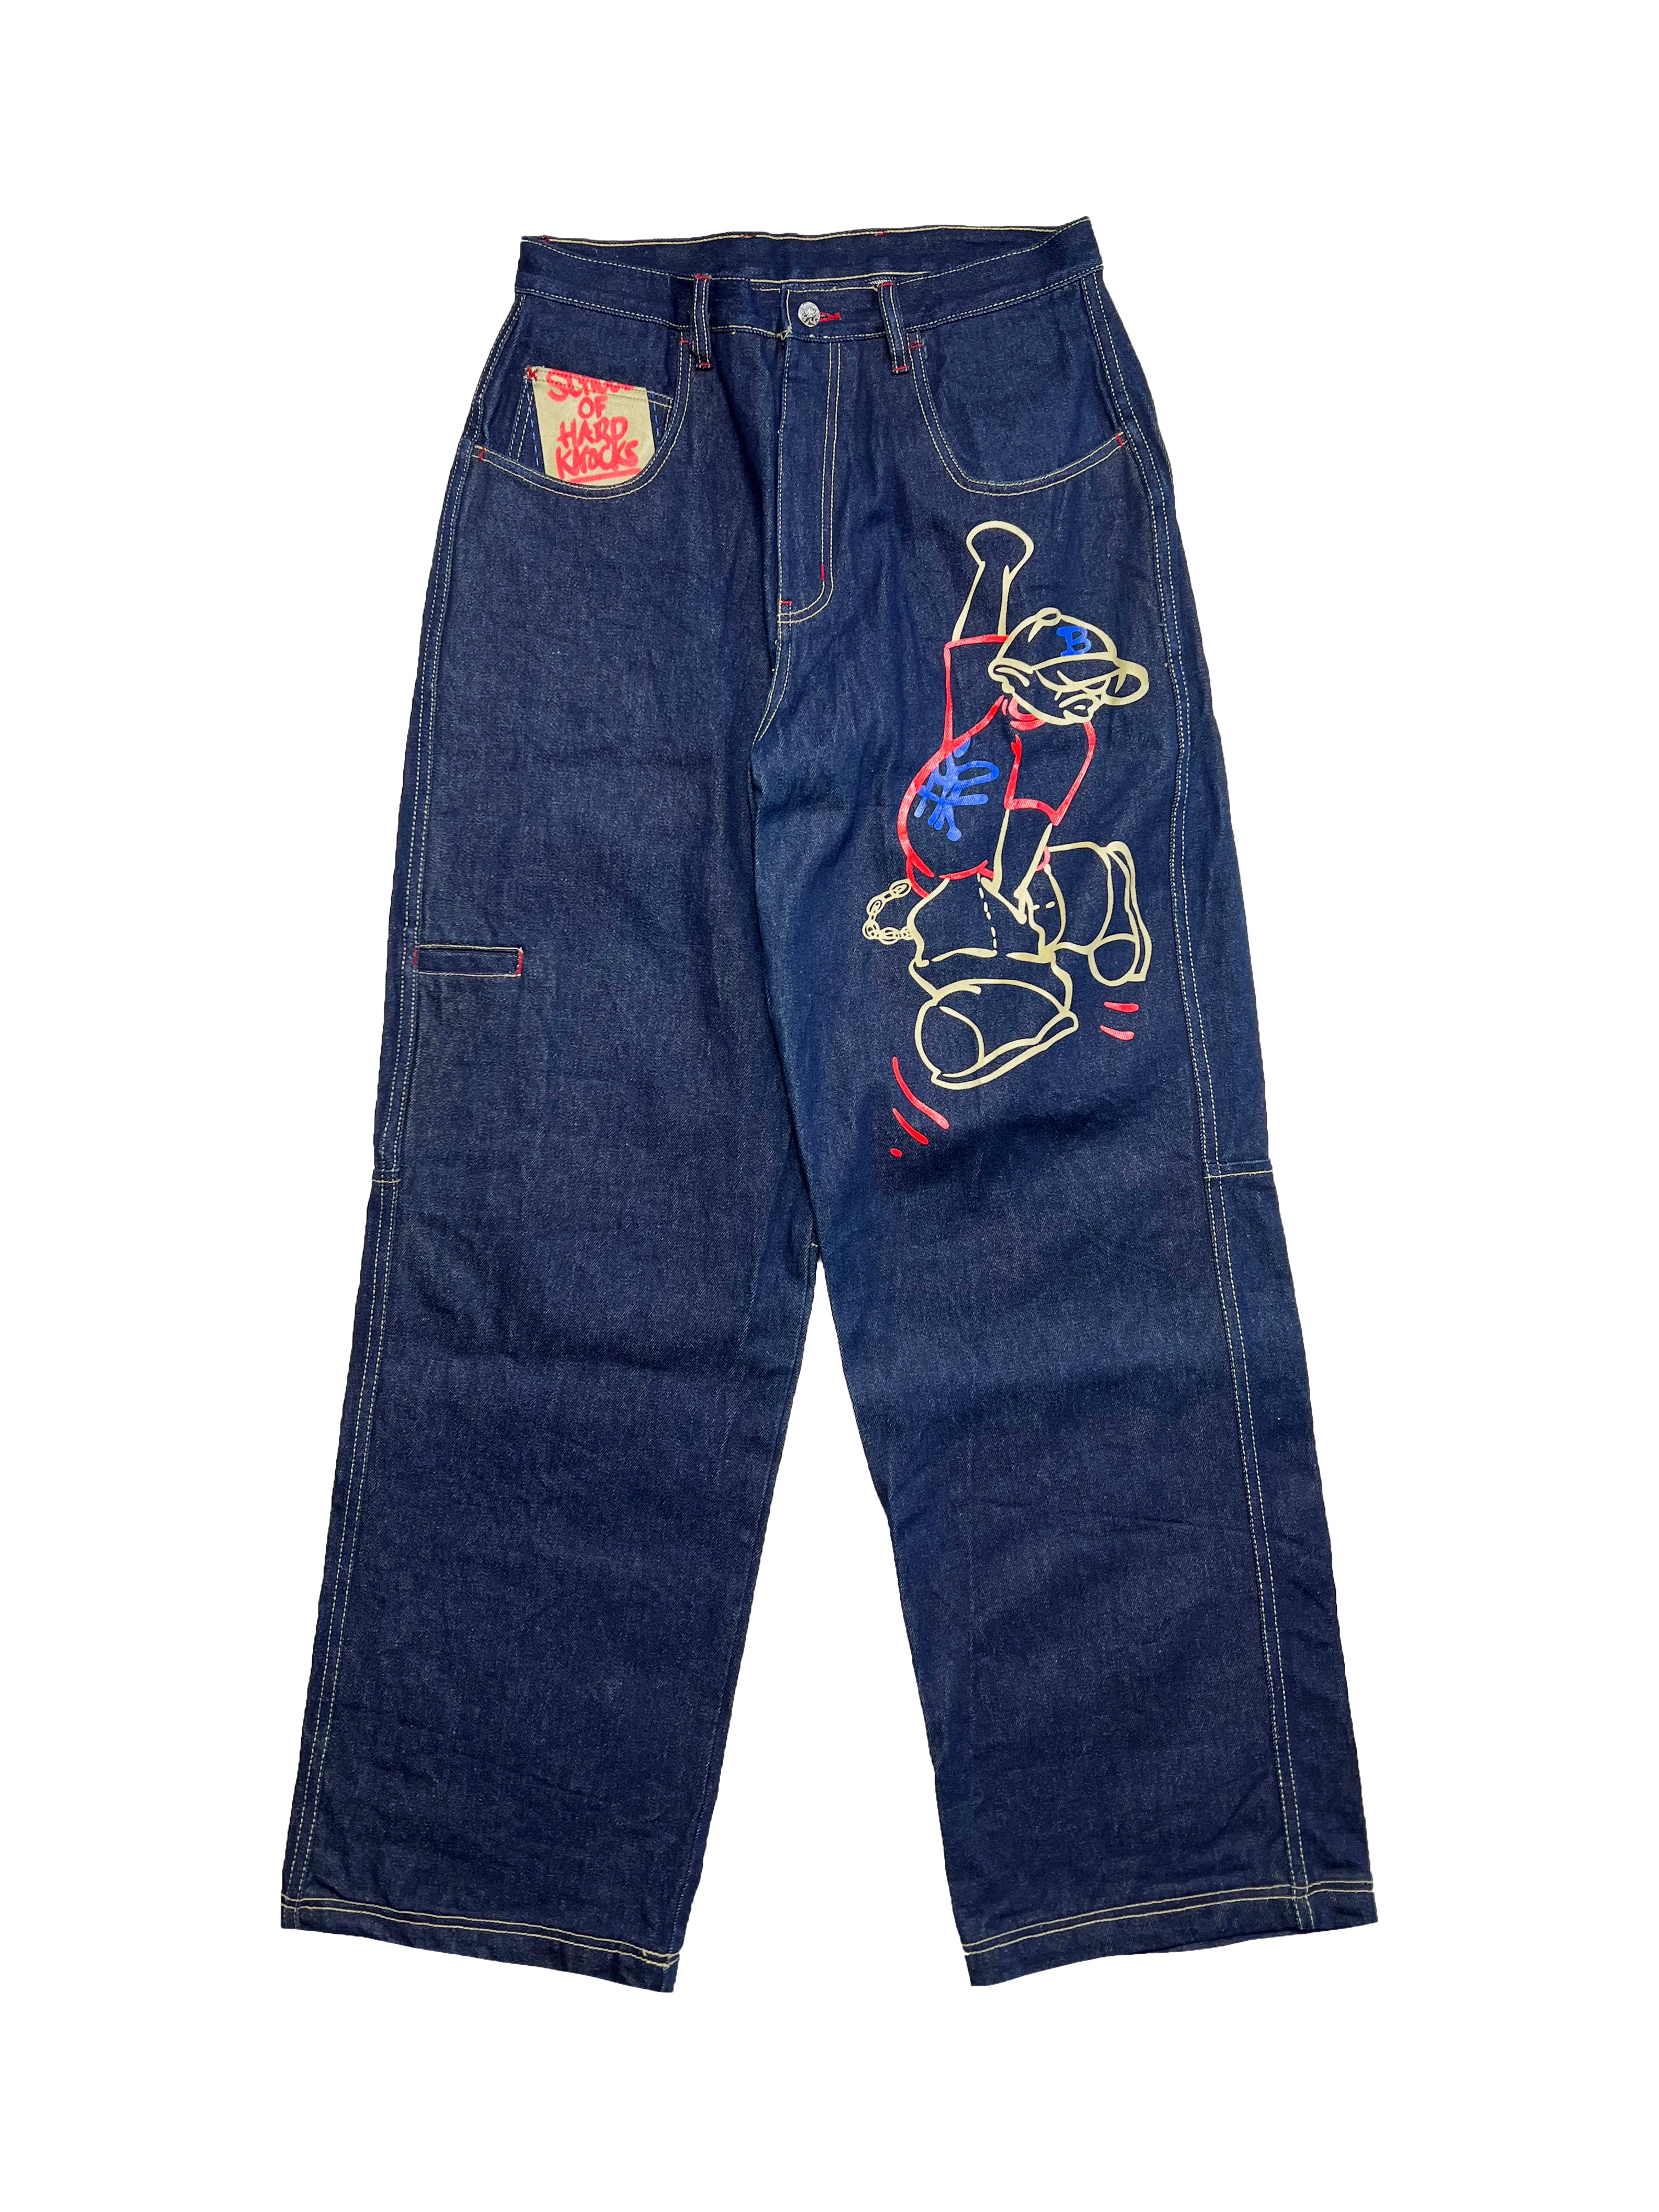 School Of Hard Knocks Indigo Character Jeans 90's